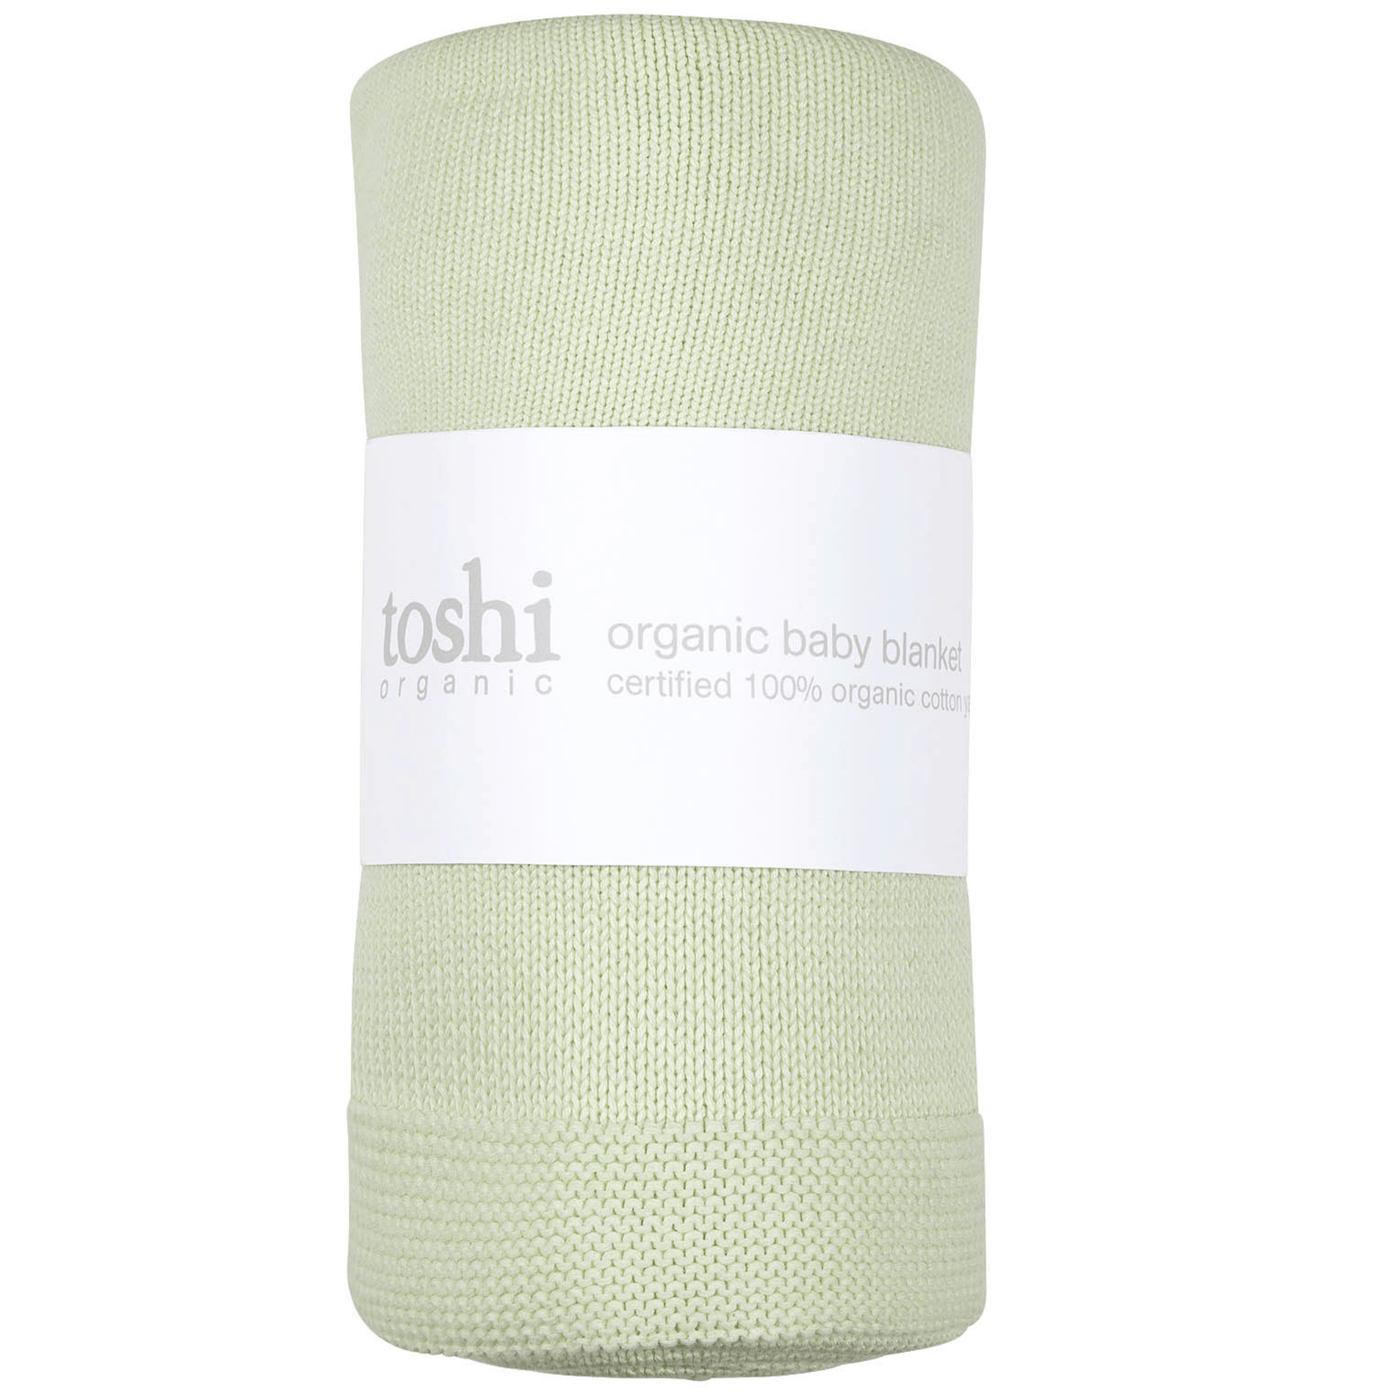 Toshi Organic Blanket Snowy Mist